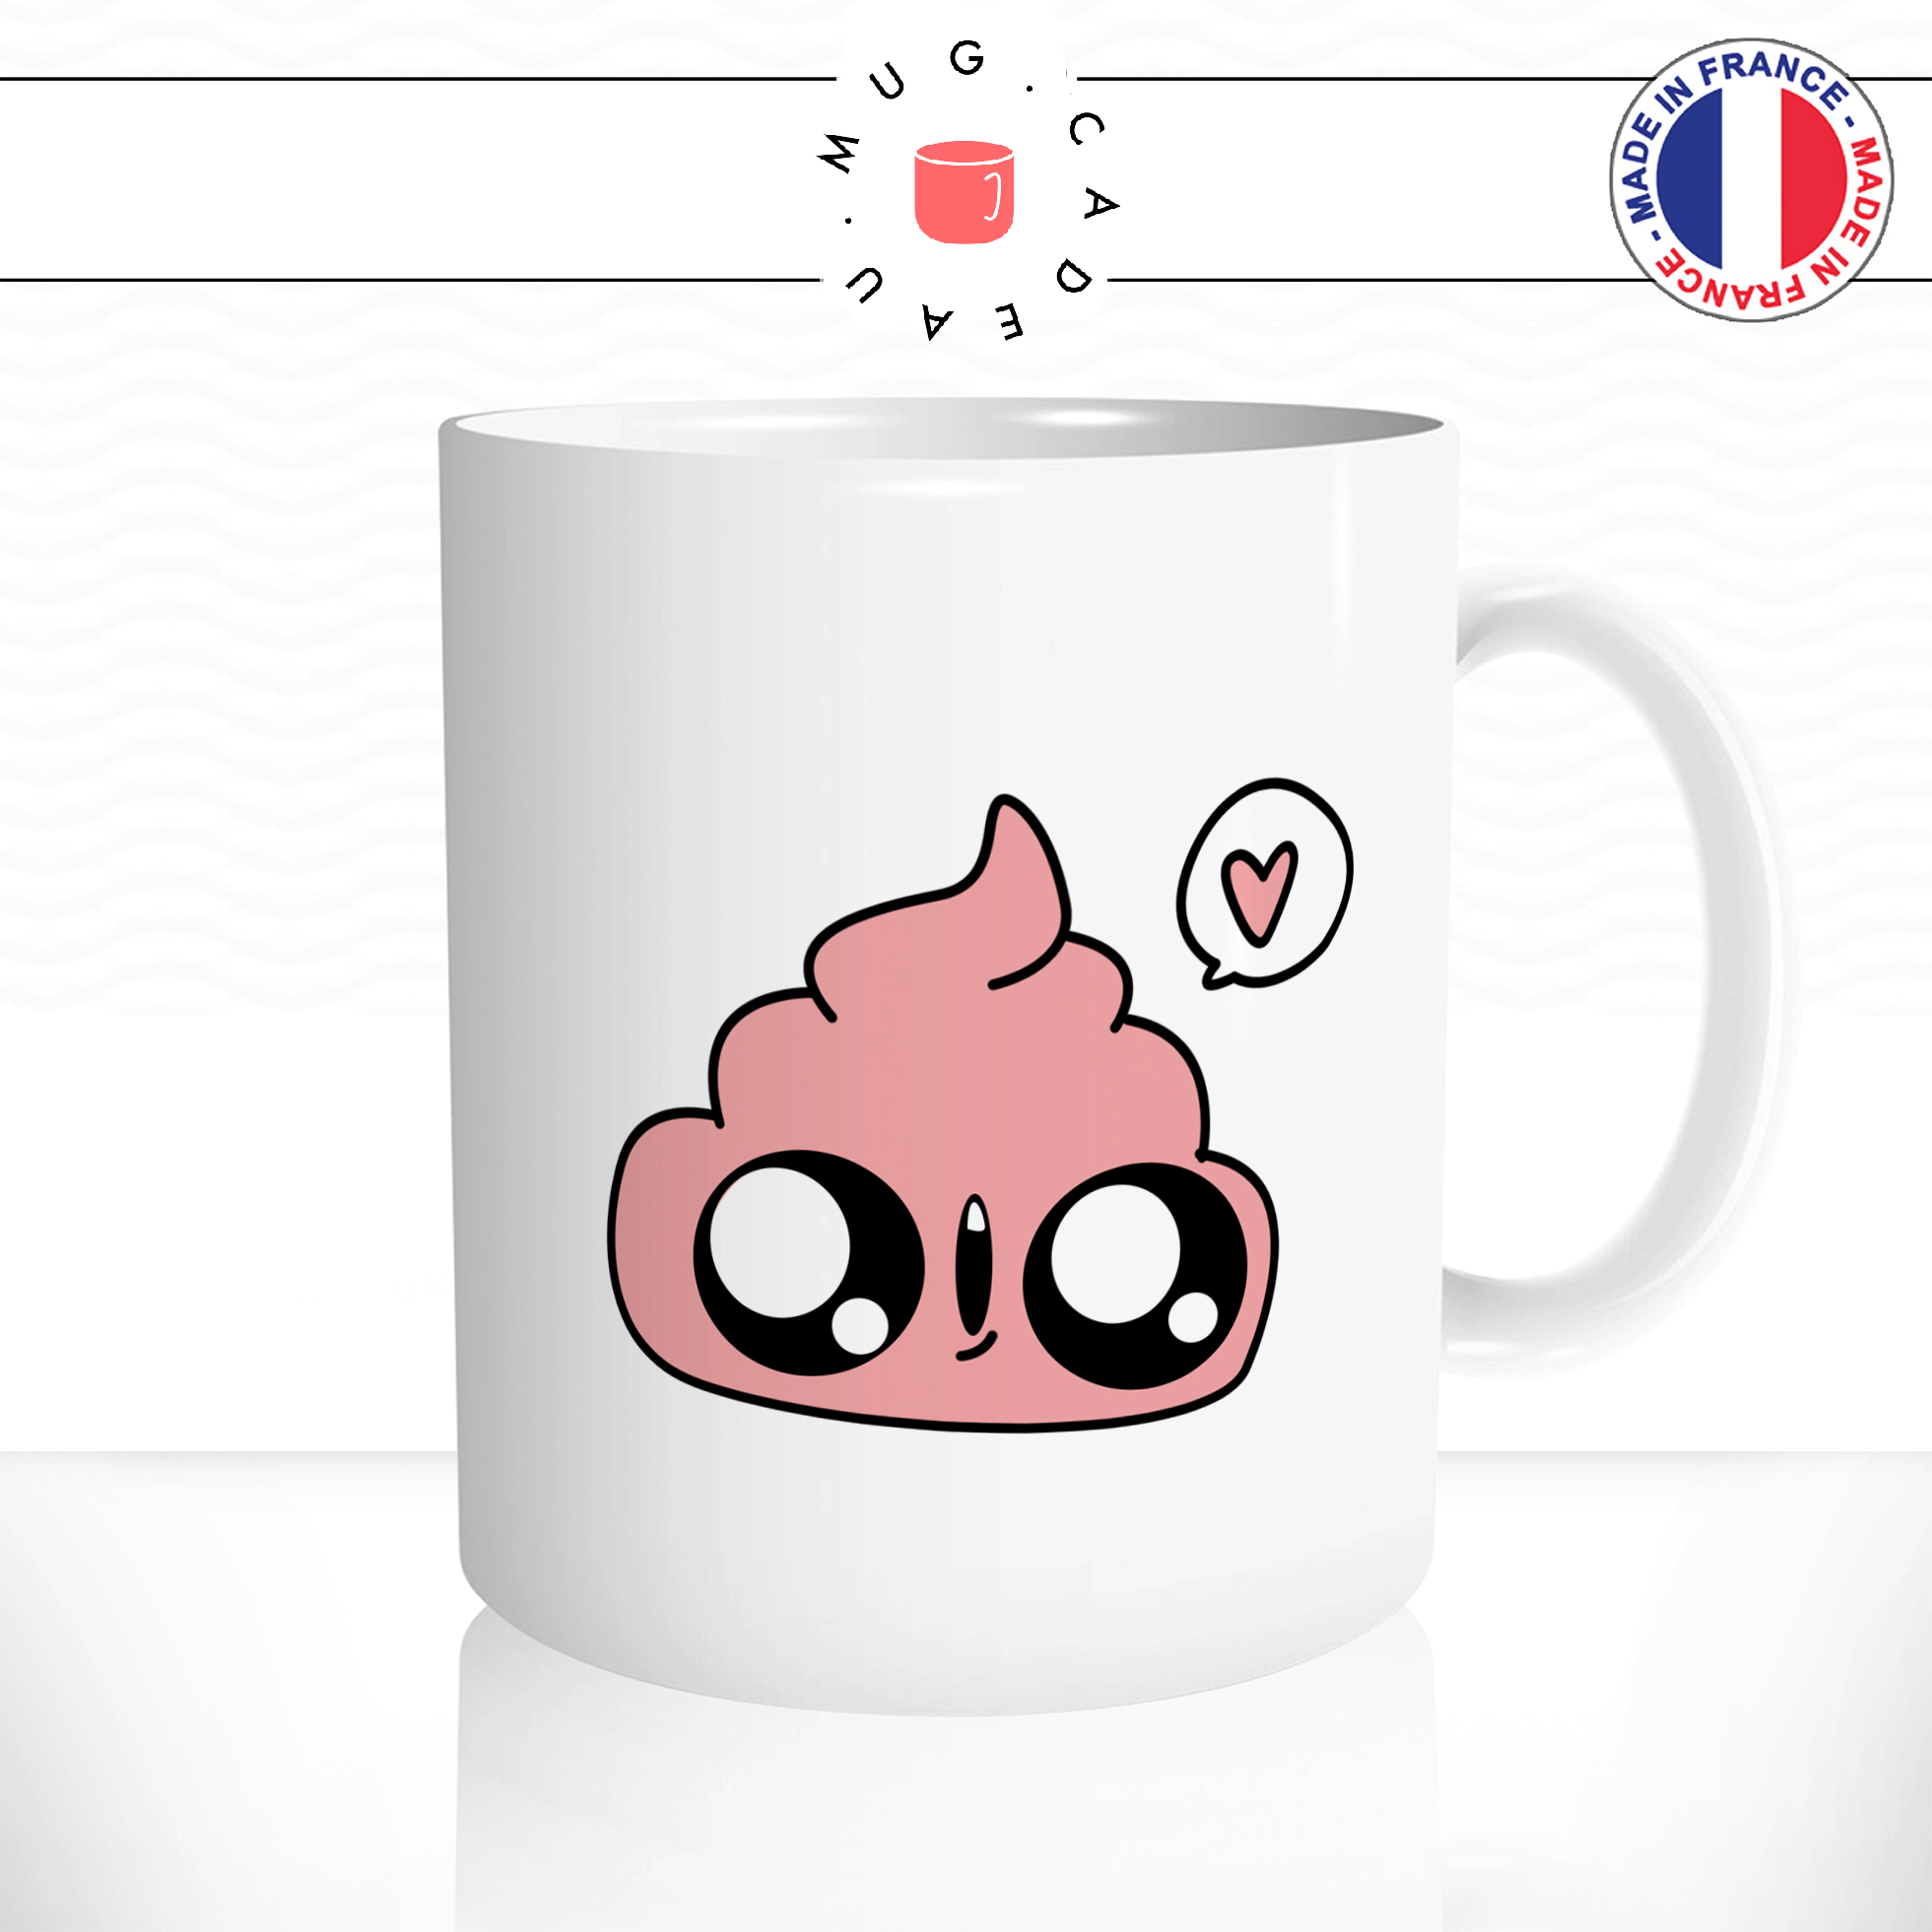 mug-tasse-ref13-drole-emoji-caca-crotte-rose-bulle-coeur-cafe-the-mugs-tasses-personnalise-anse-droite